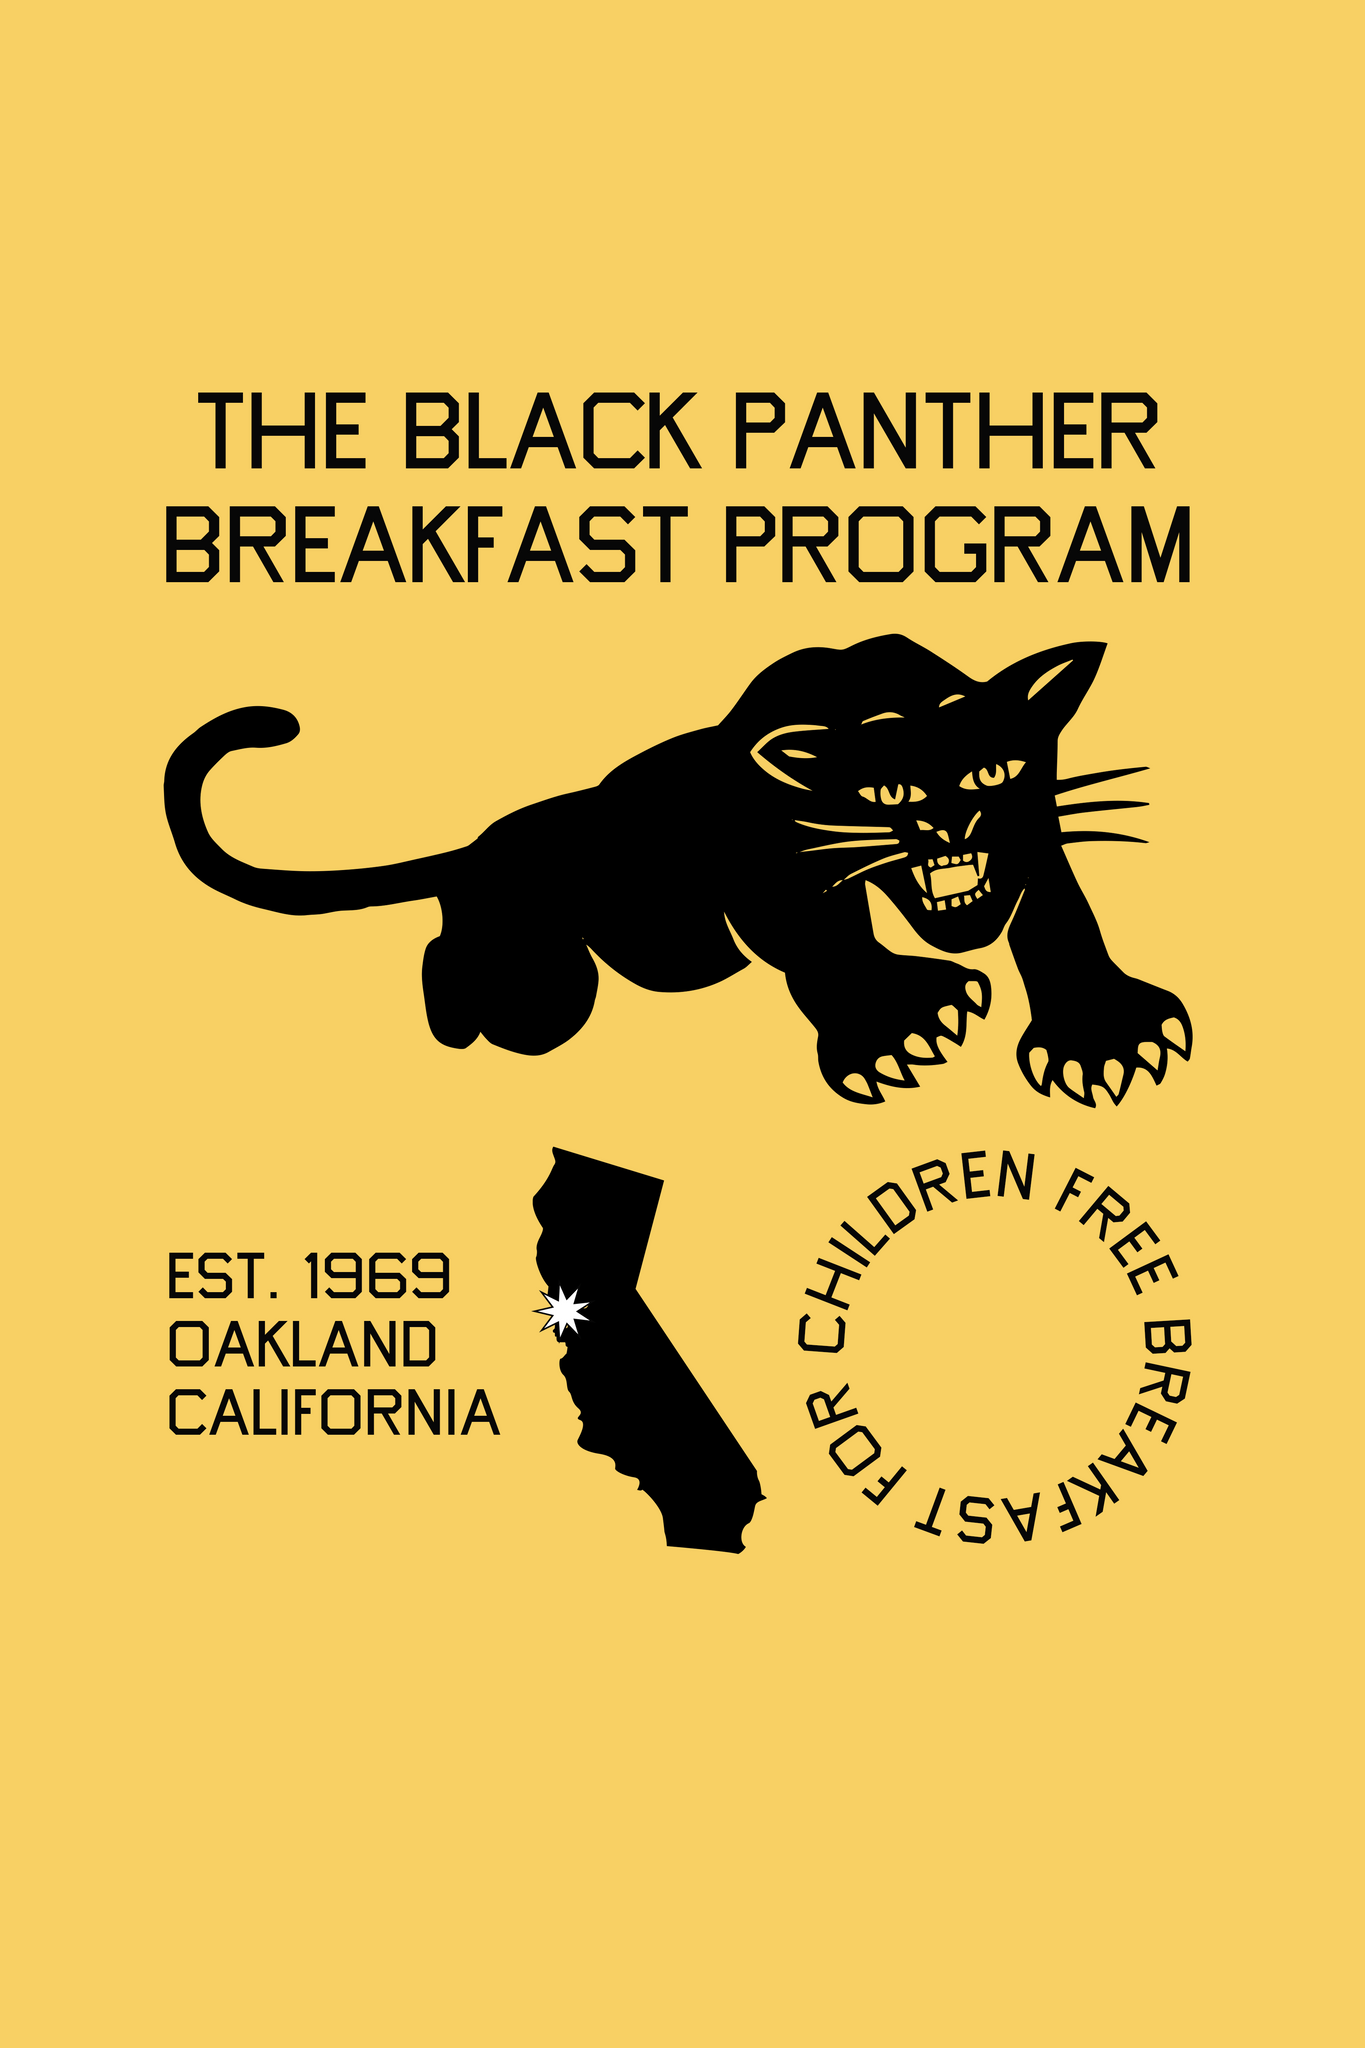 The Black Panther Breakfast Program Tee